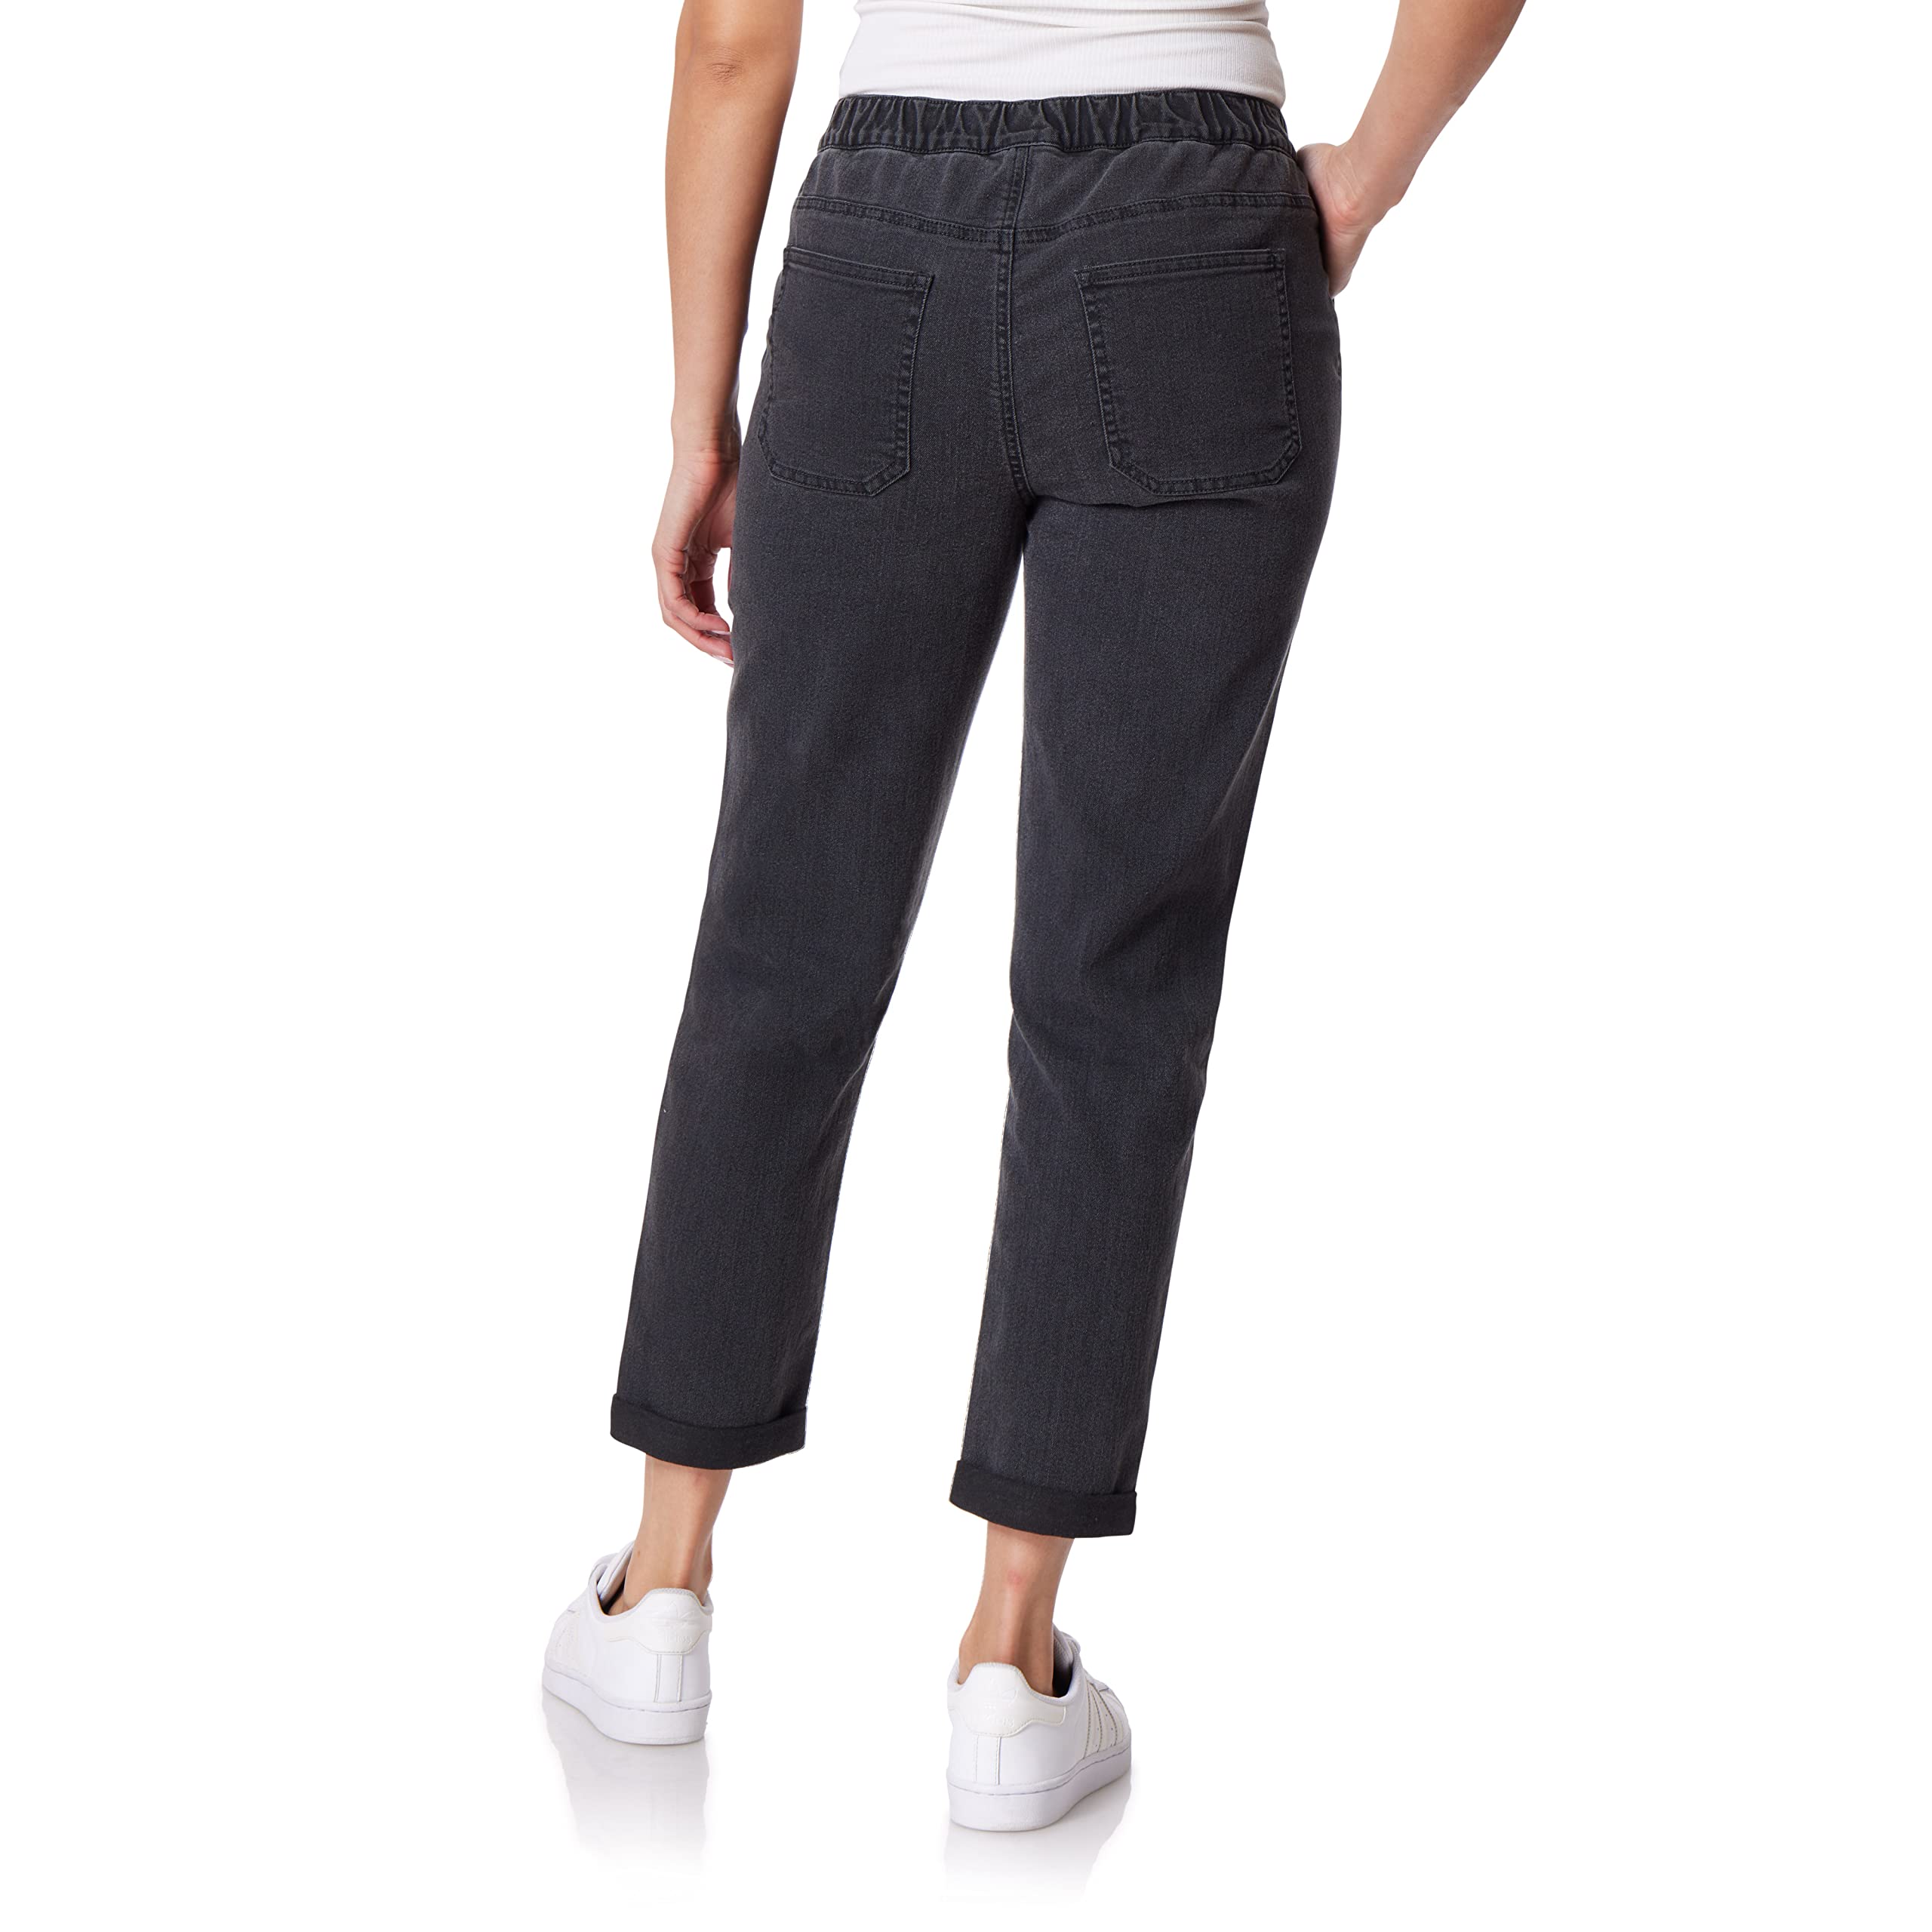 WallFlower Women's Tomboy Jogger Denim Mid-Rise Insta Stretch Juniors Jeans, Carbon, 1